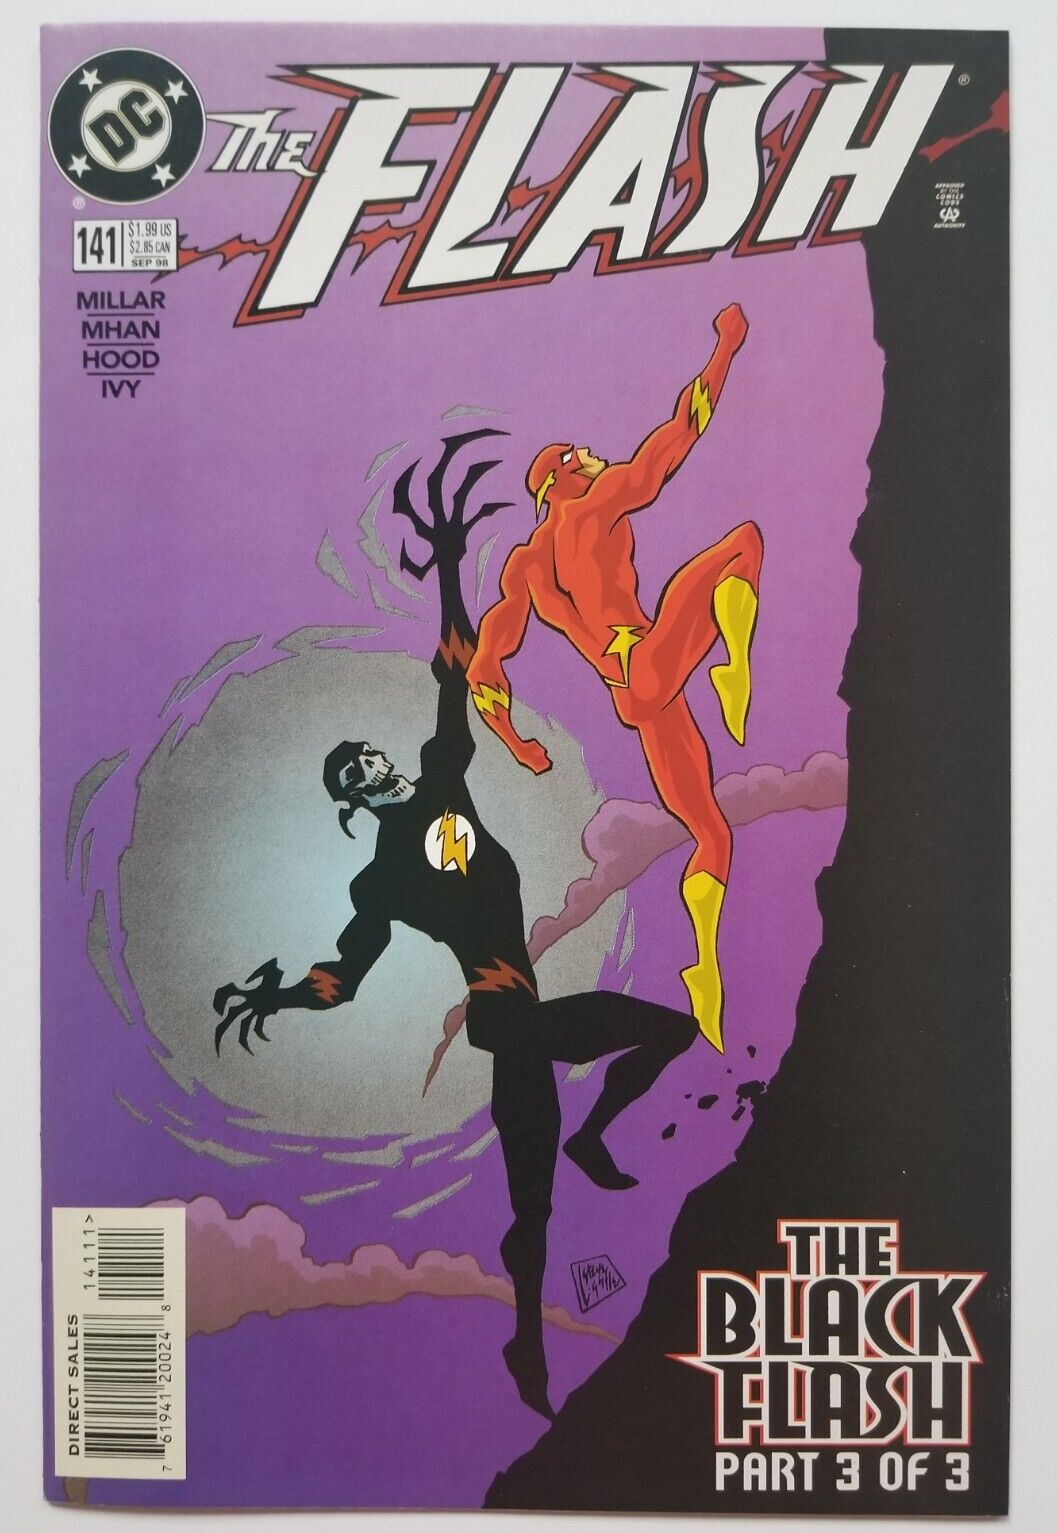 Flash #141 (DC Comics, 1998) Black Flash Part 3, 1st Appearance, Mark Millar